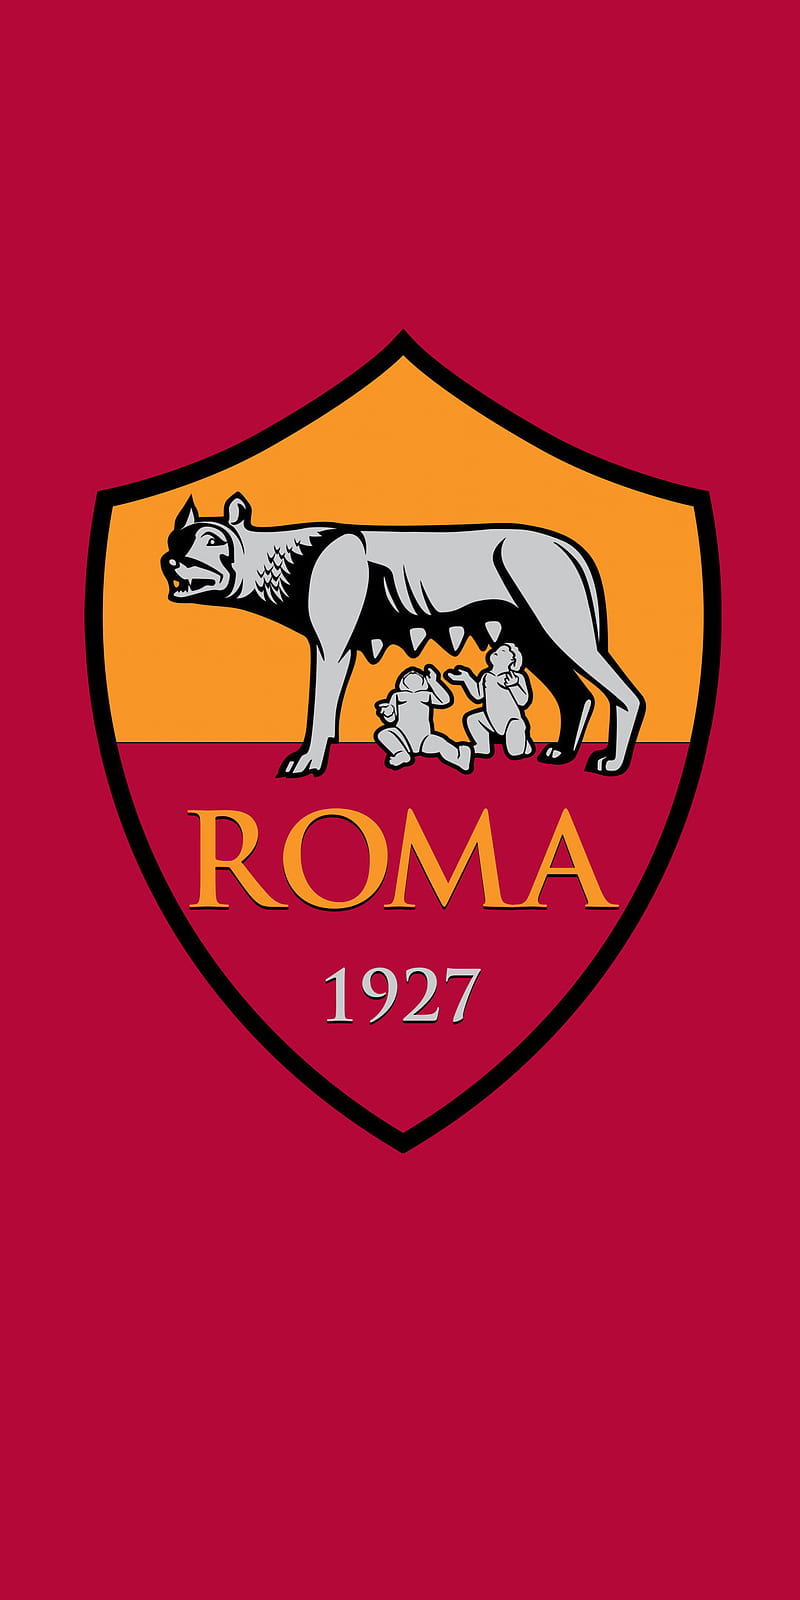 https://w0.peakpx.com/wallpaper/186/644/HD-wallpaper-roma-calcio-italia-logo.jpg